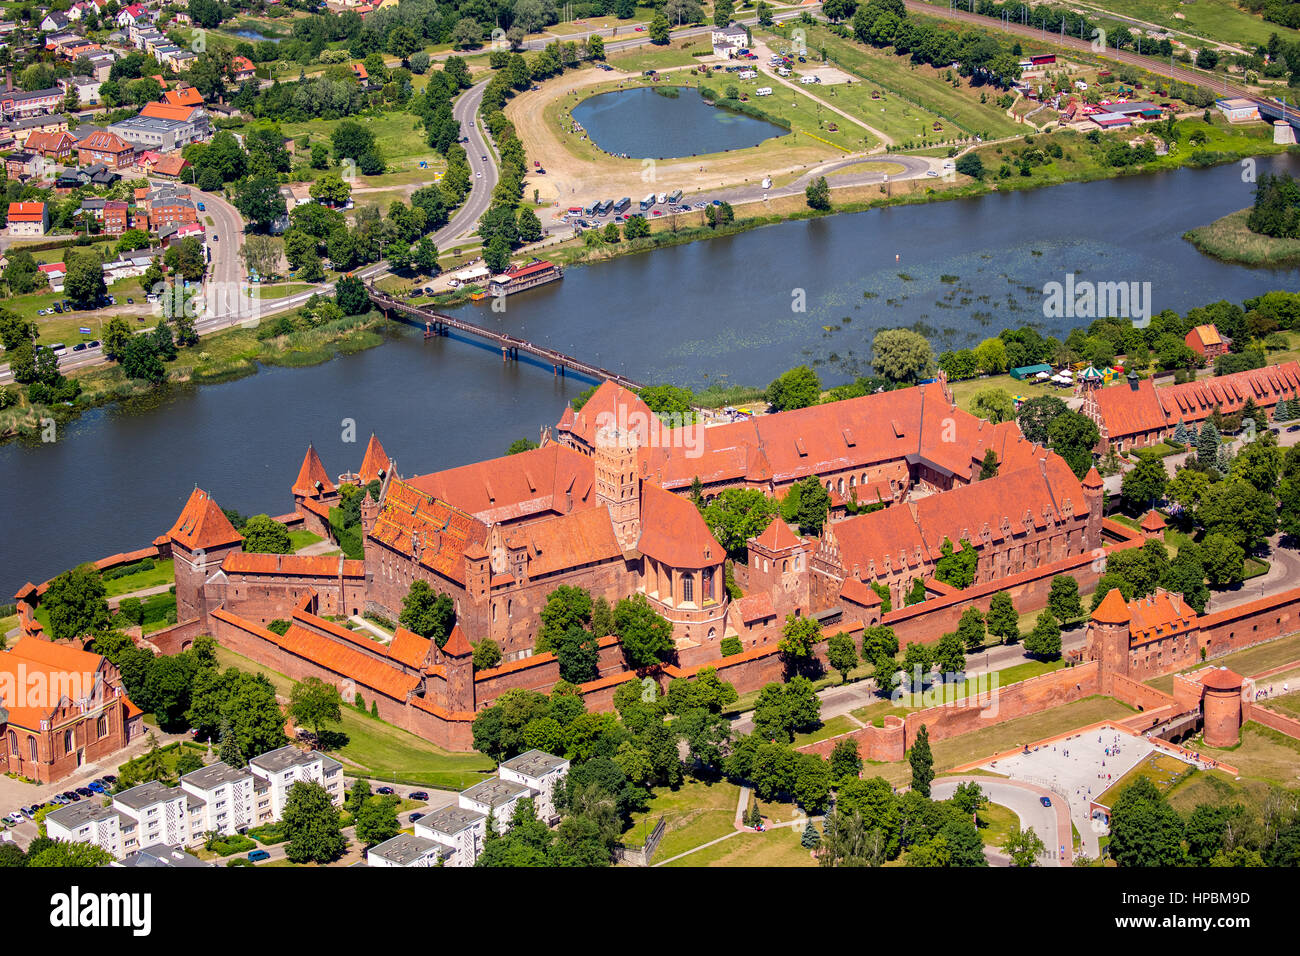 Malbork castle plant, brick gothic, Nogat River, Malbork city, seat of the Grand Master of the Teutonic Order, German Teutonic Knights, pomorskie, Pol Stock Photo